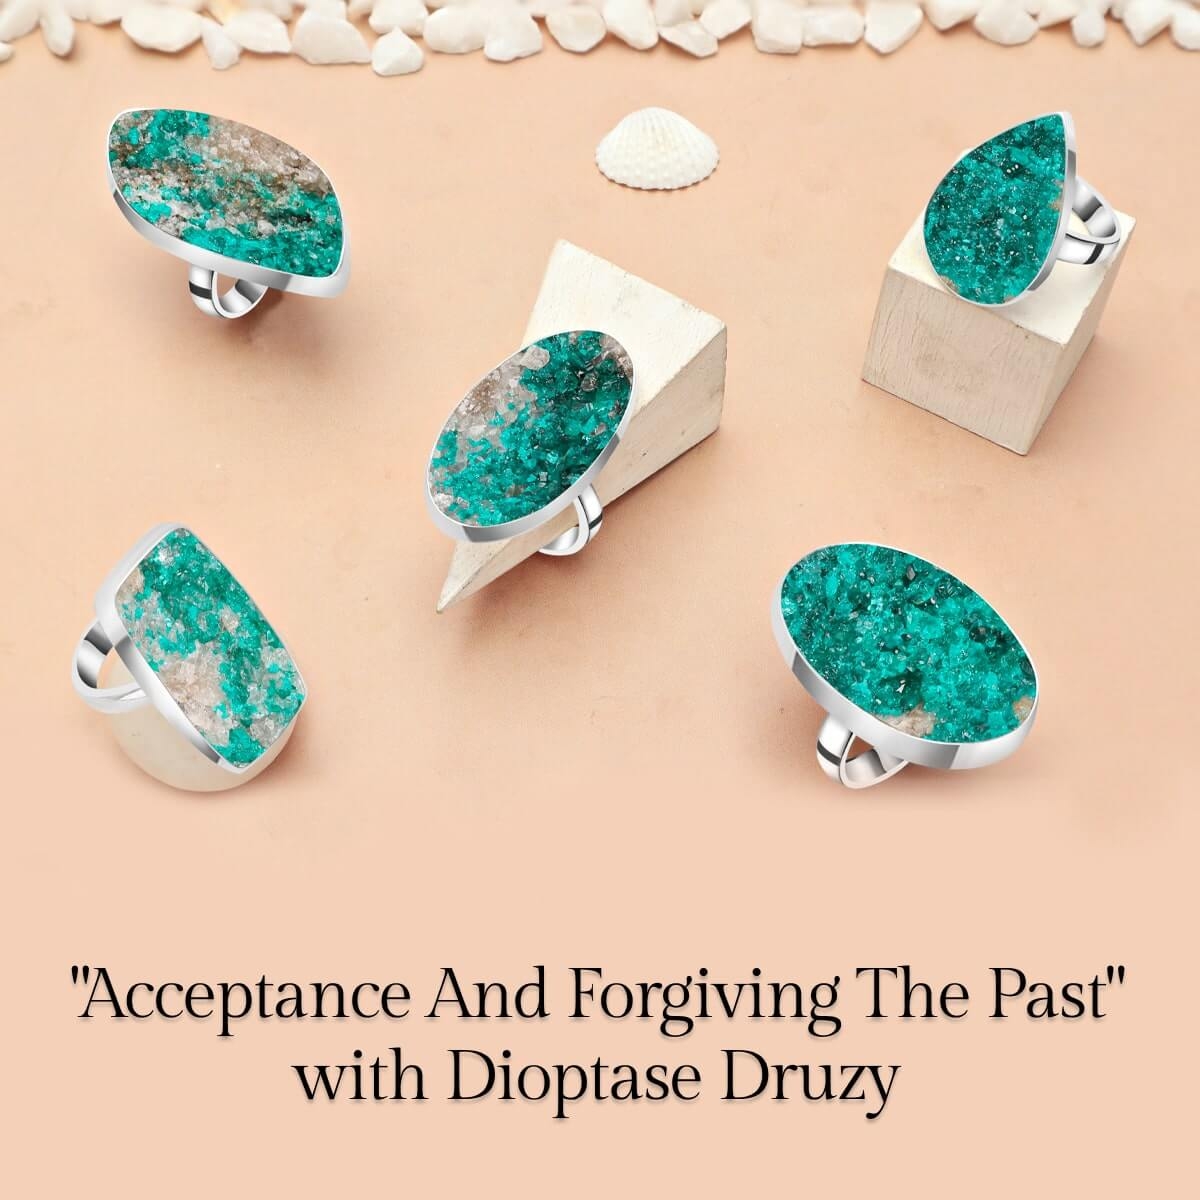 Dioptase Druzy Mental Healing Properties